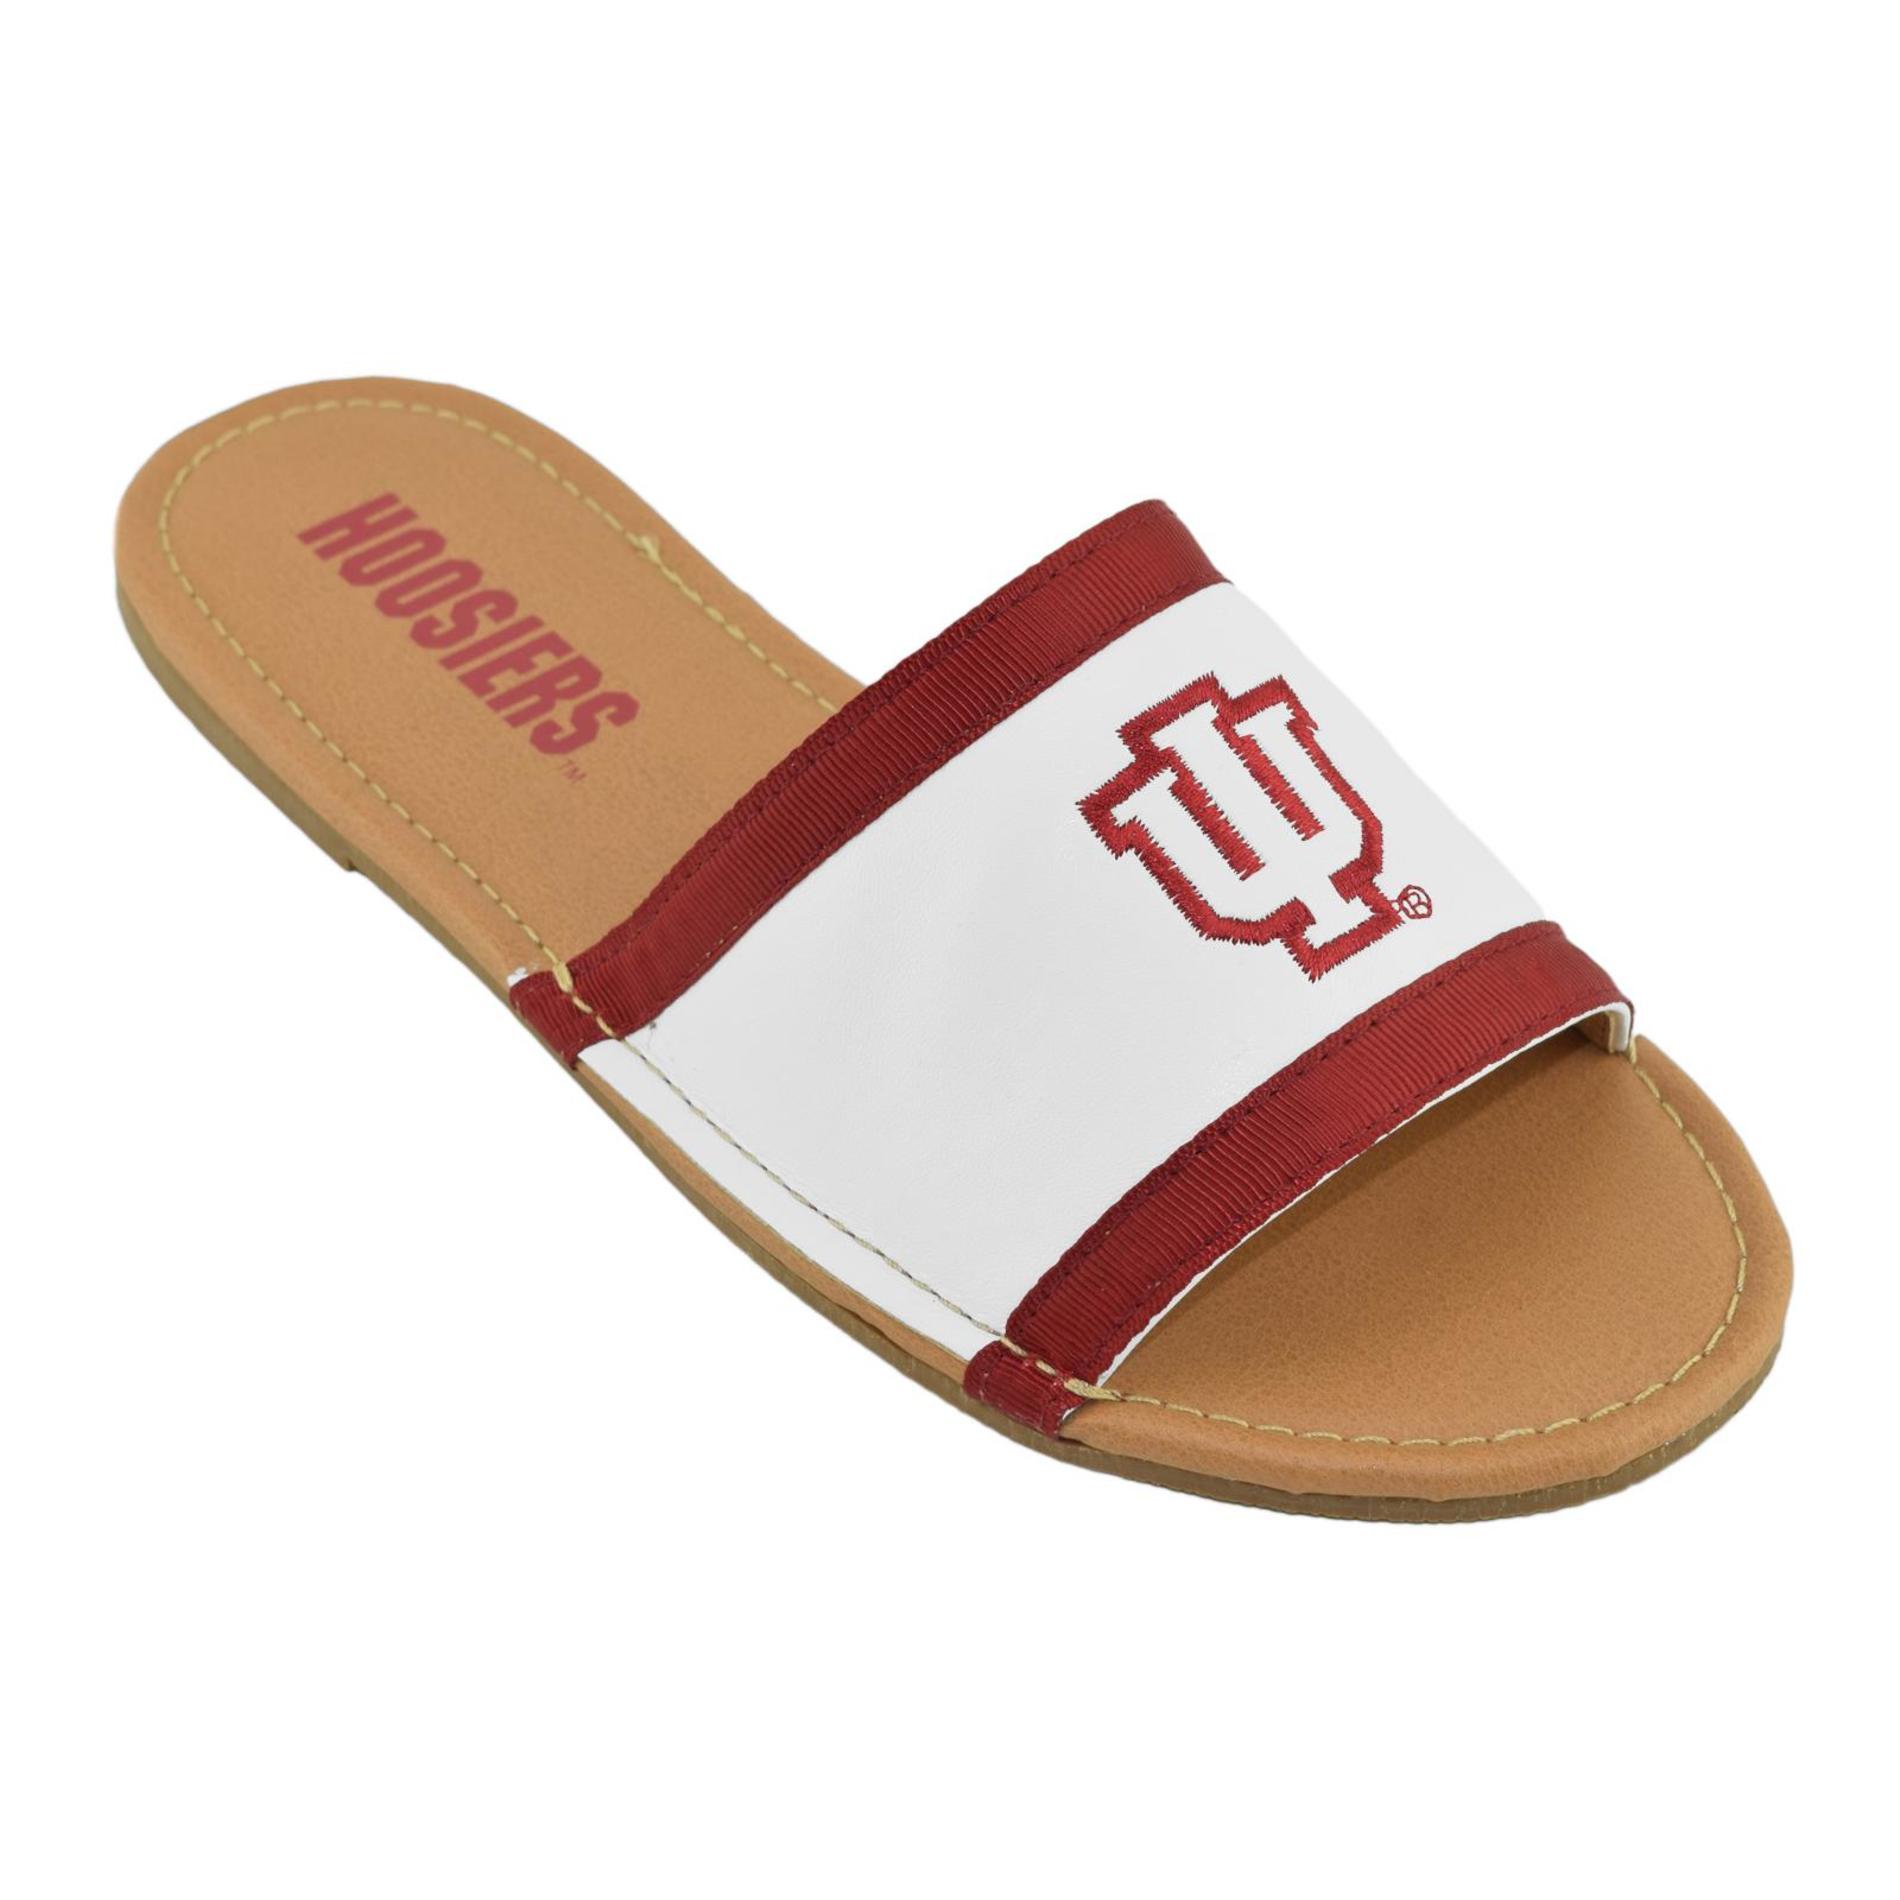 NCAA Women's Slide Sandal - Indiana University Hoosiers